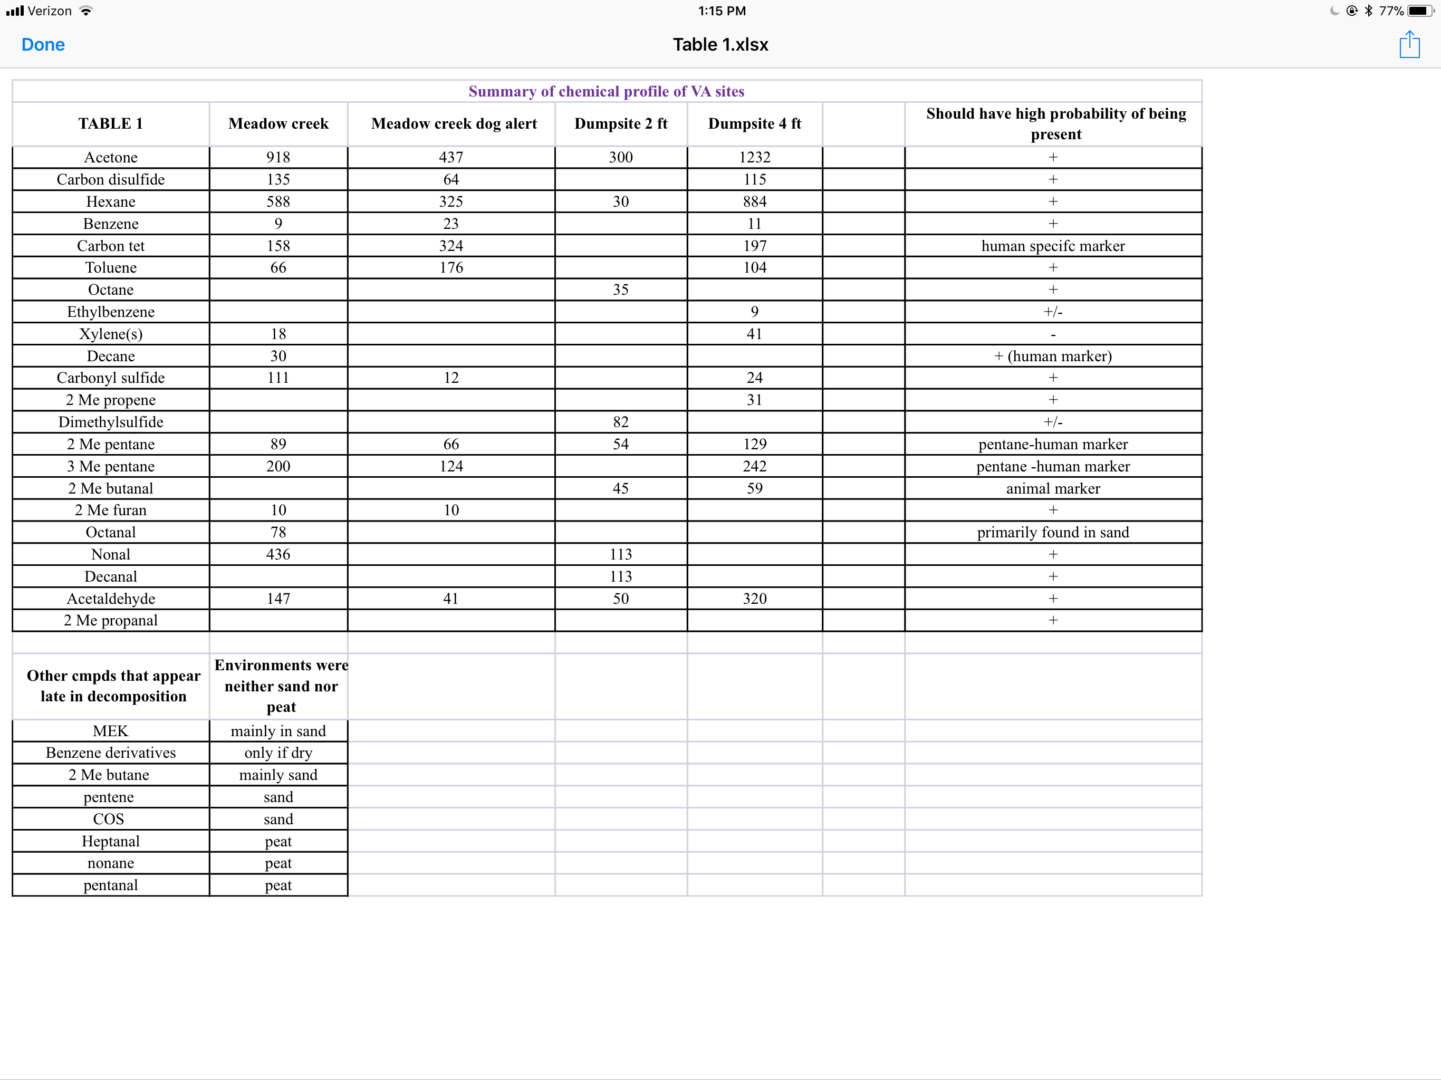 Table for soil analysis